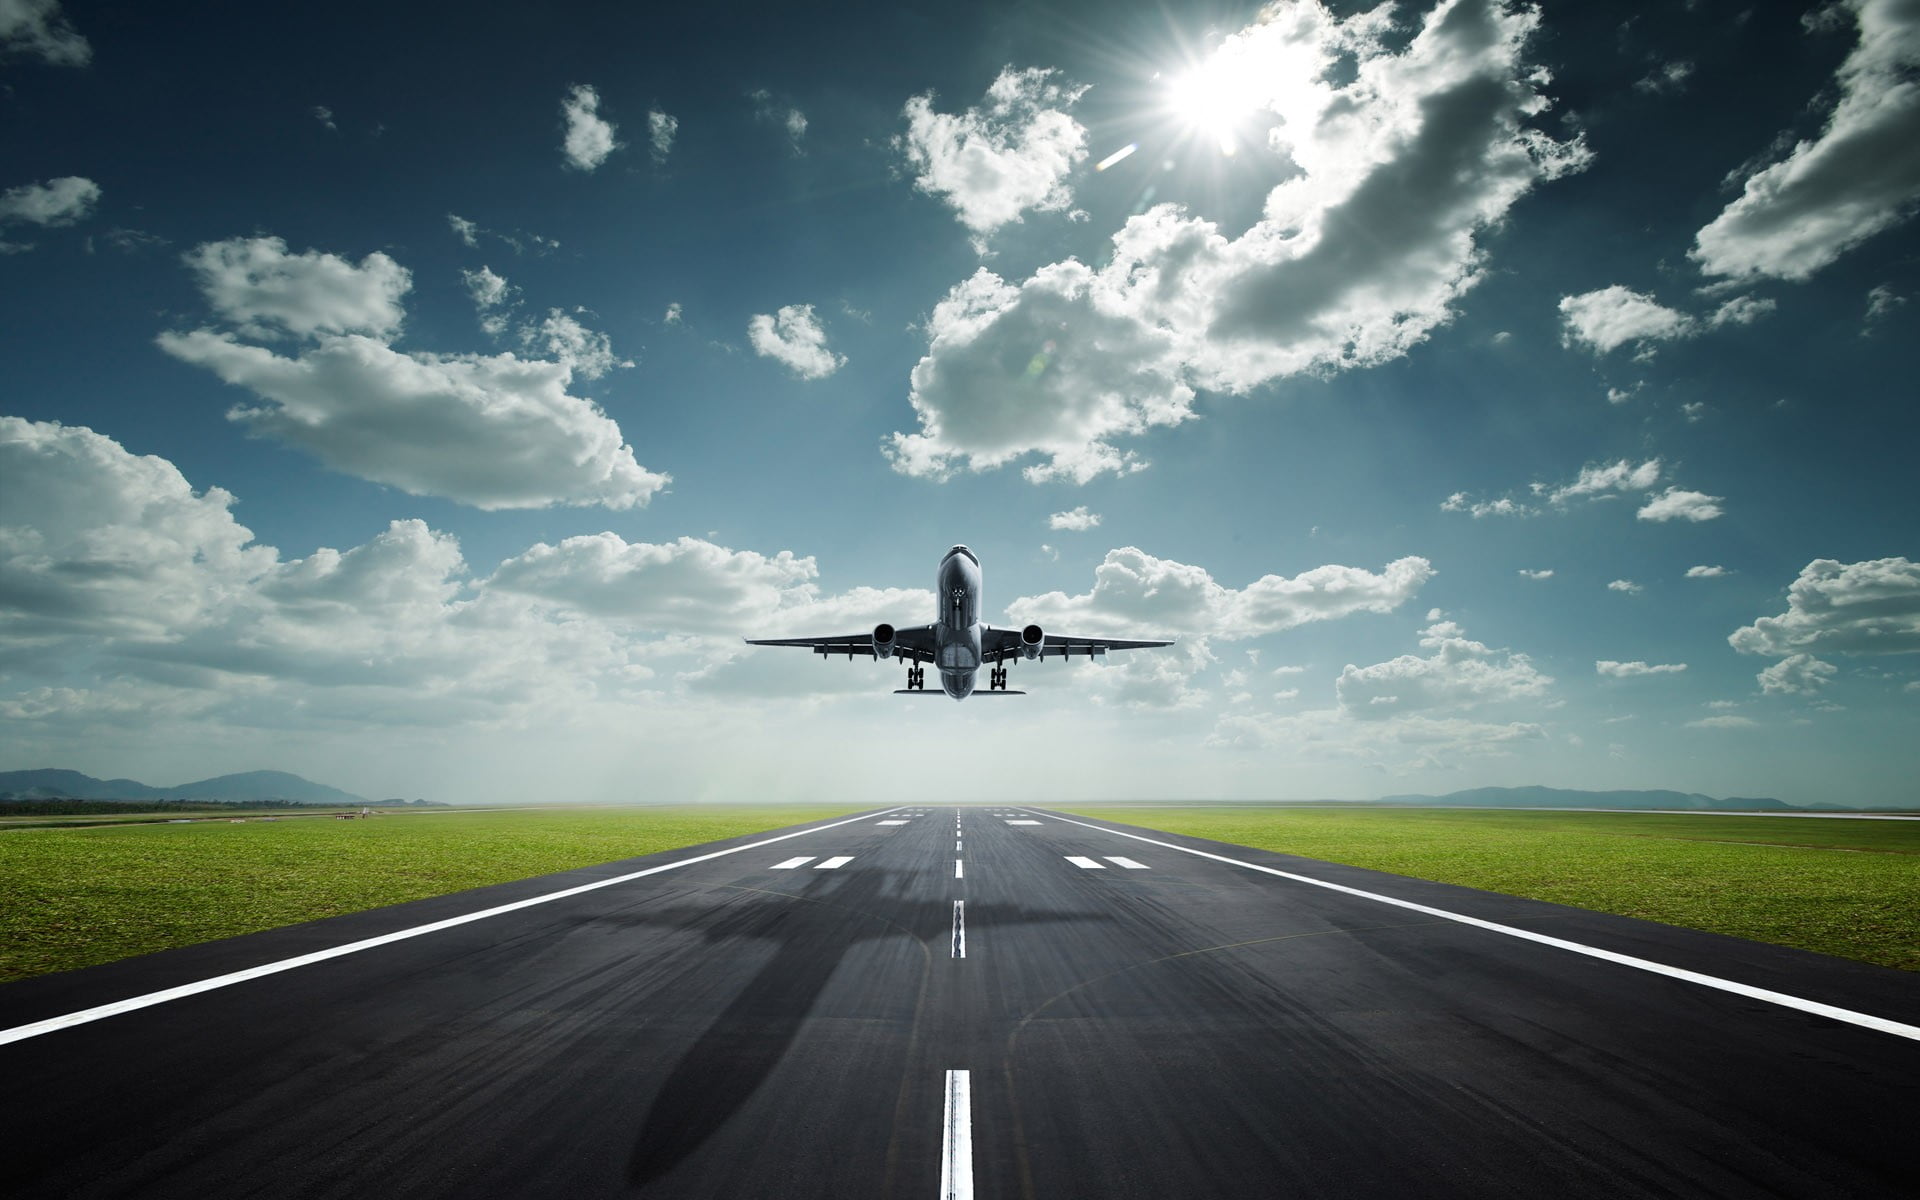 white plane, airplane, runway, transportation, air vehicle, sky